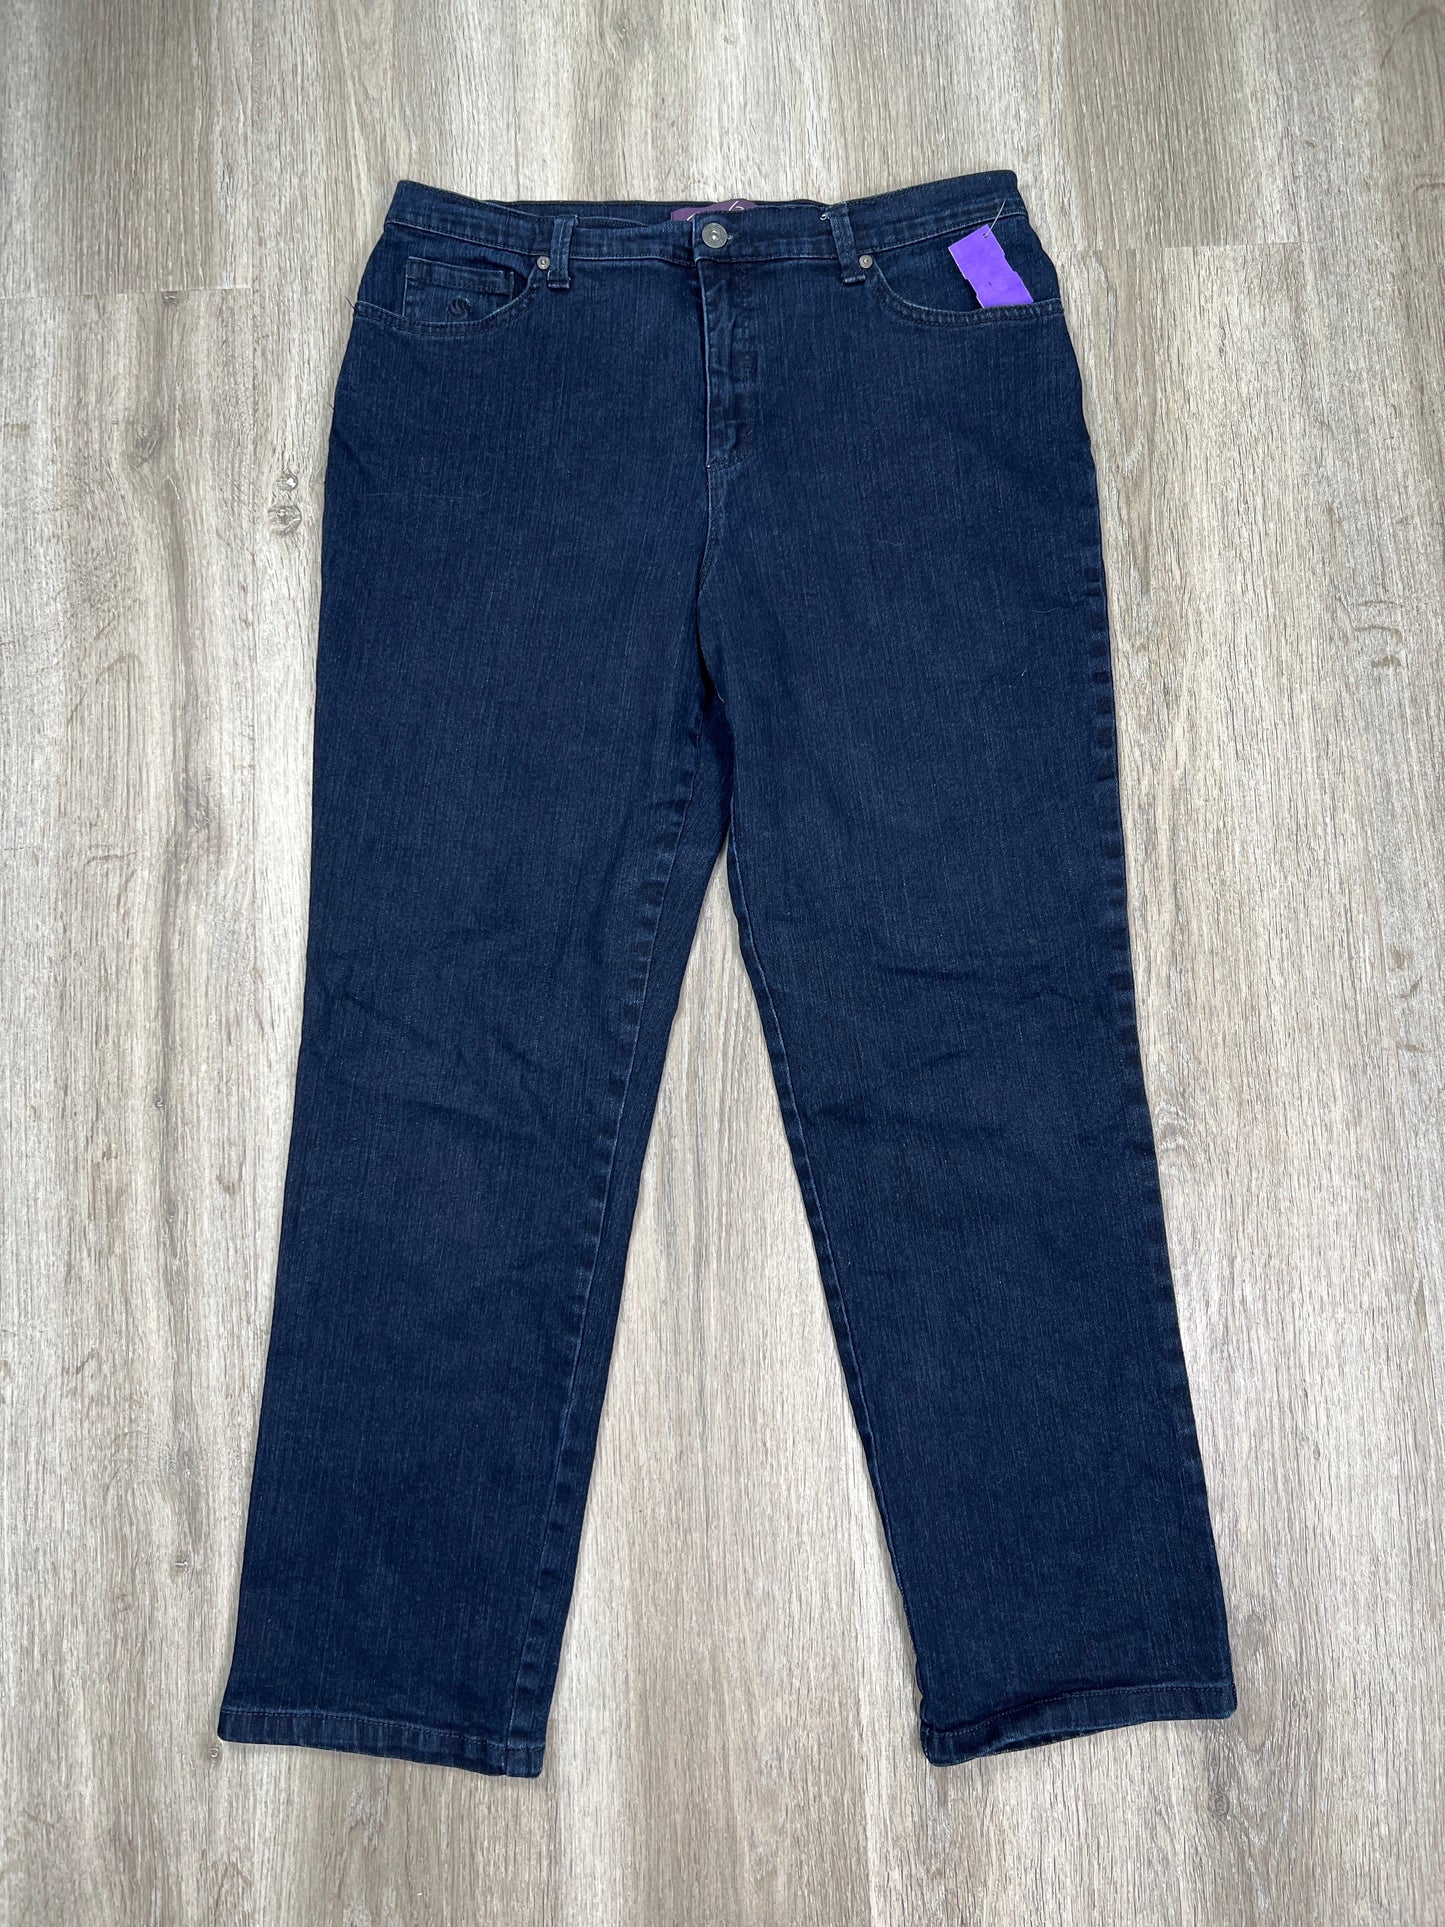 Blue Denim Jeans Straight Gloria Vanderbilt, Size 12